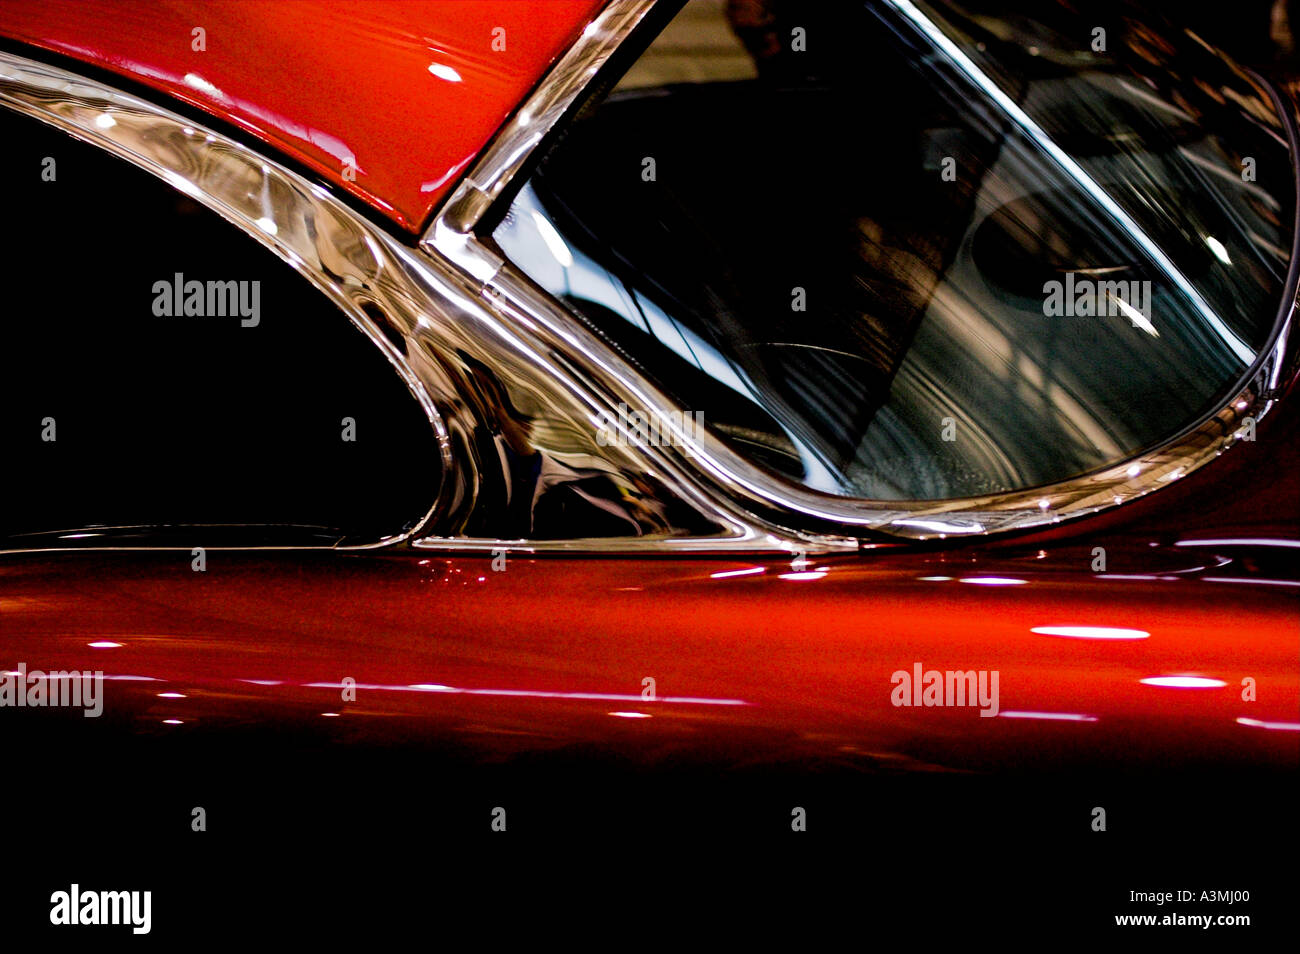 Vieille voiture de collection shinny rouge montrer american usa Banque D'Images